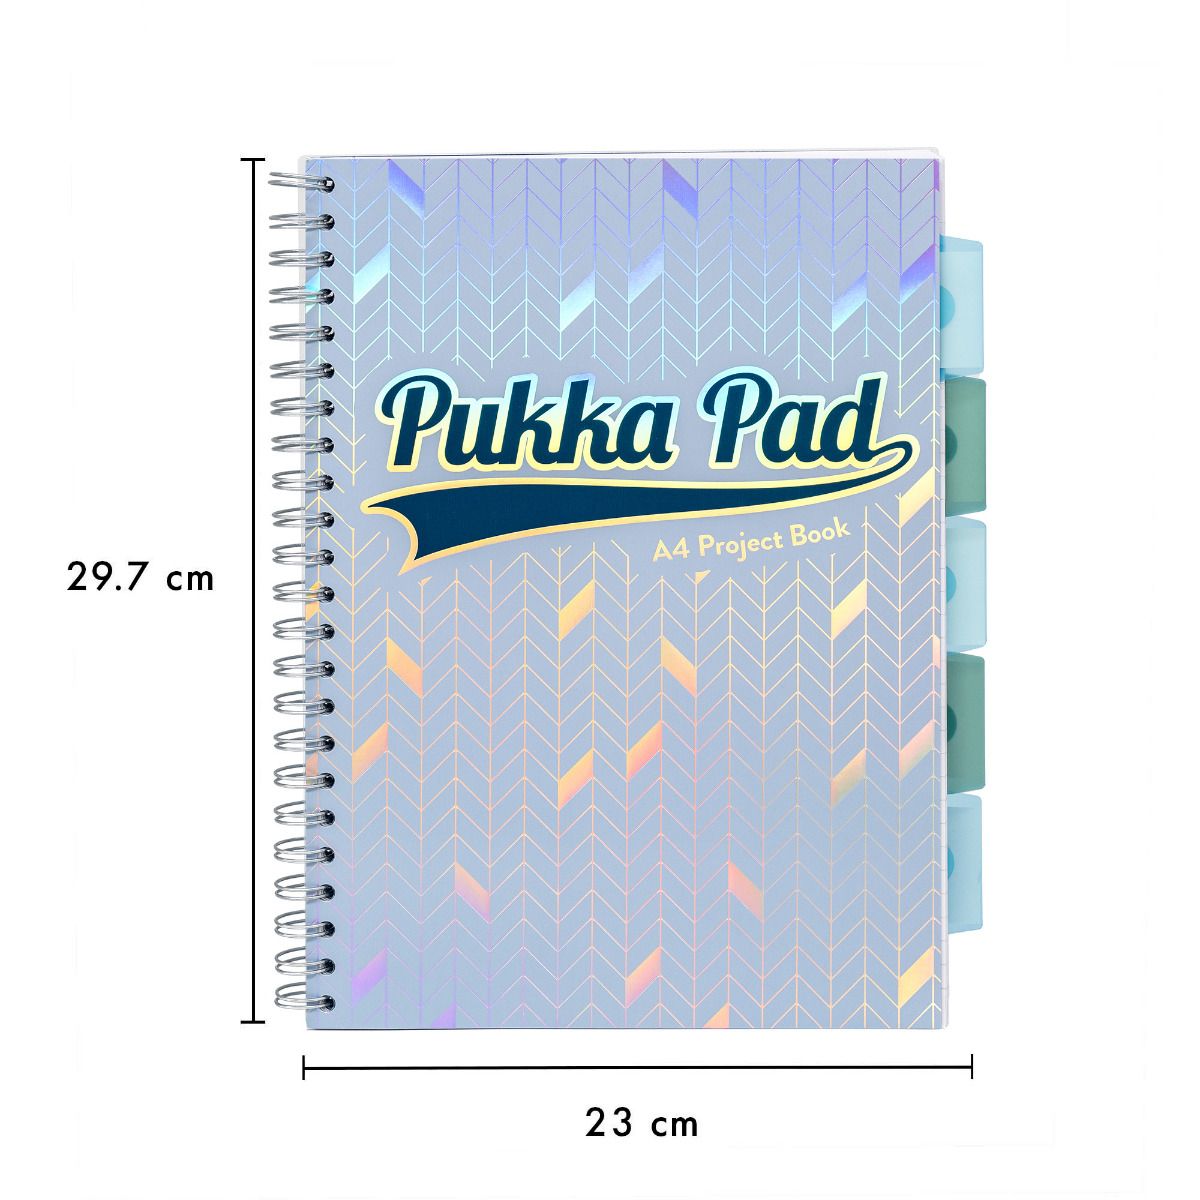 Caiet cu spirala si separatoare Pukka Pads Project Book Glee 200 pag matematica A4 albastru deschis